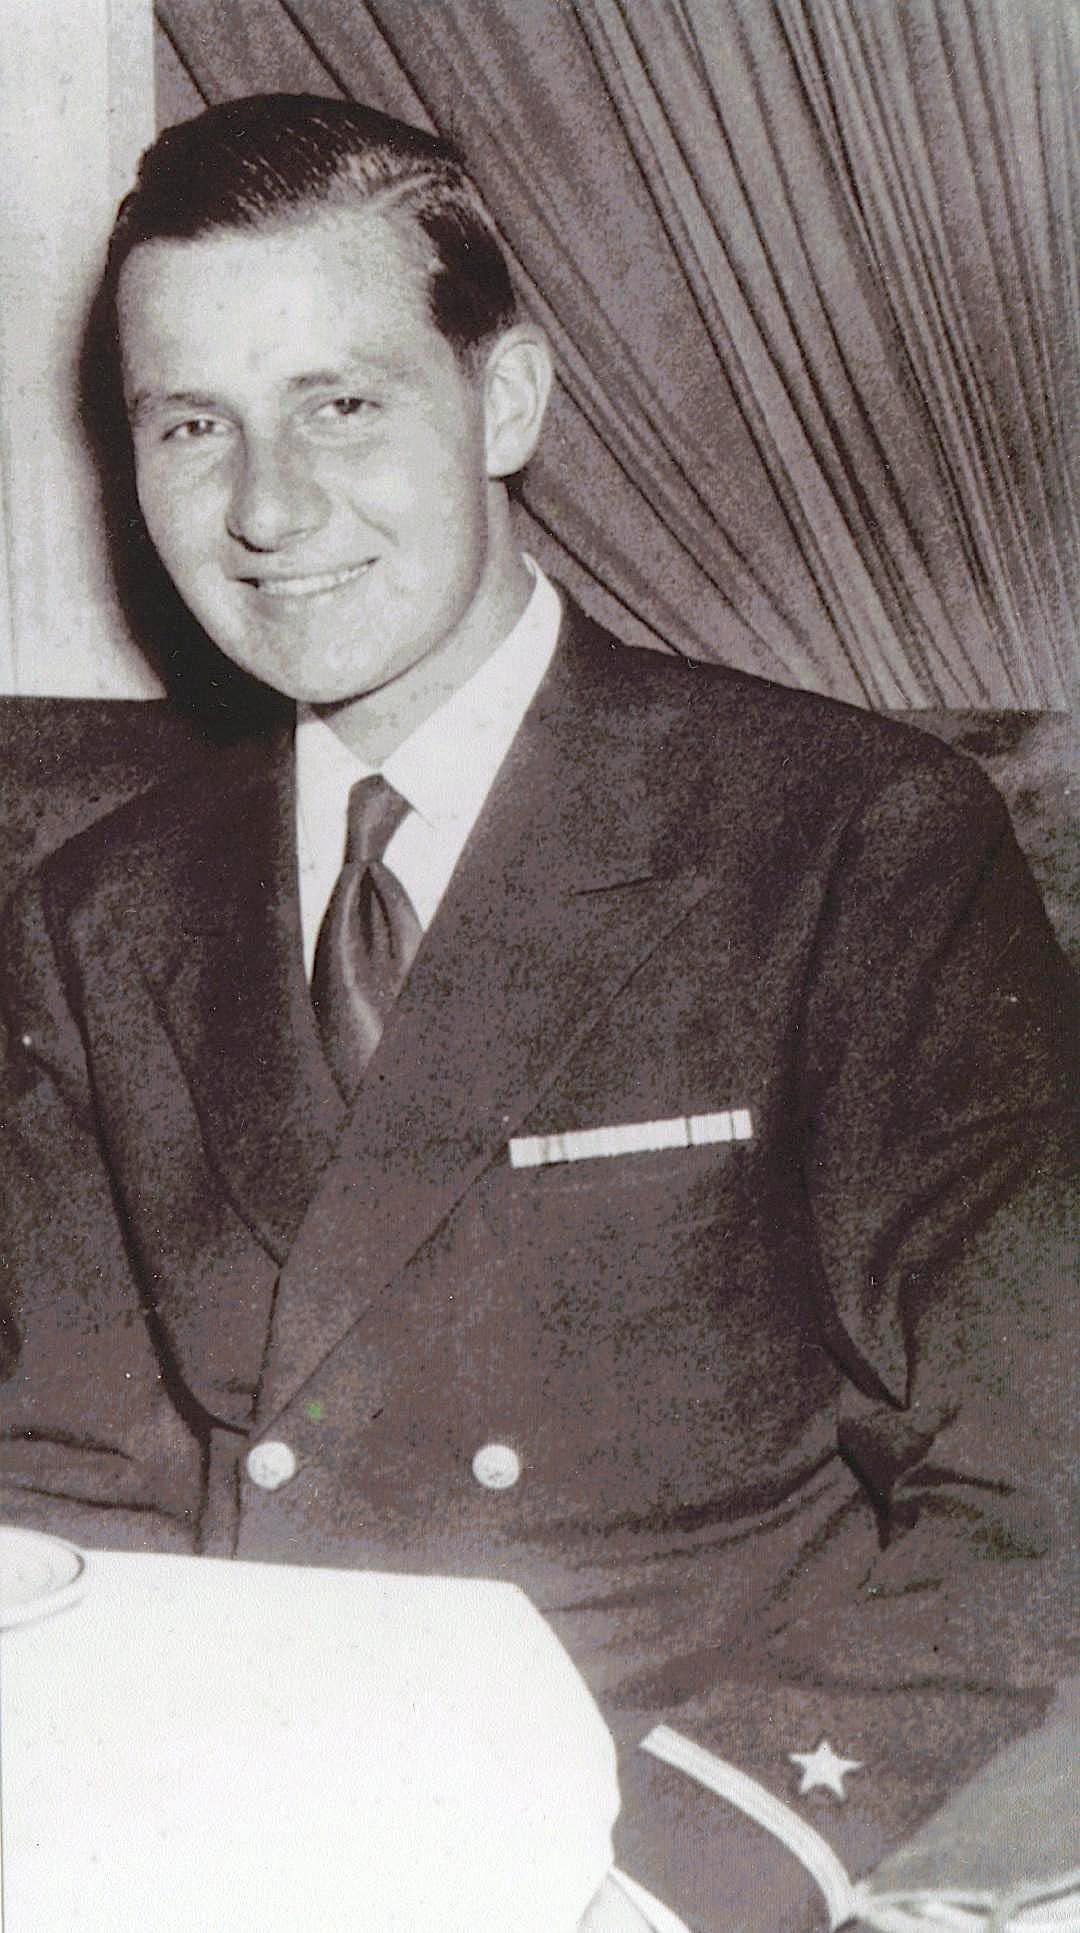 Then-Ensign J. William Middendorf, around 1946.